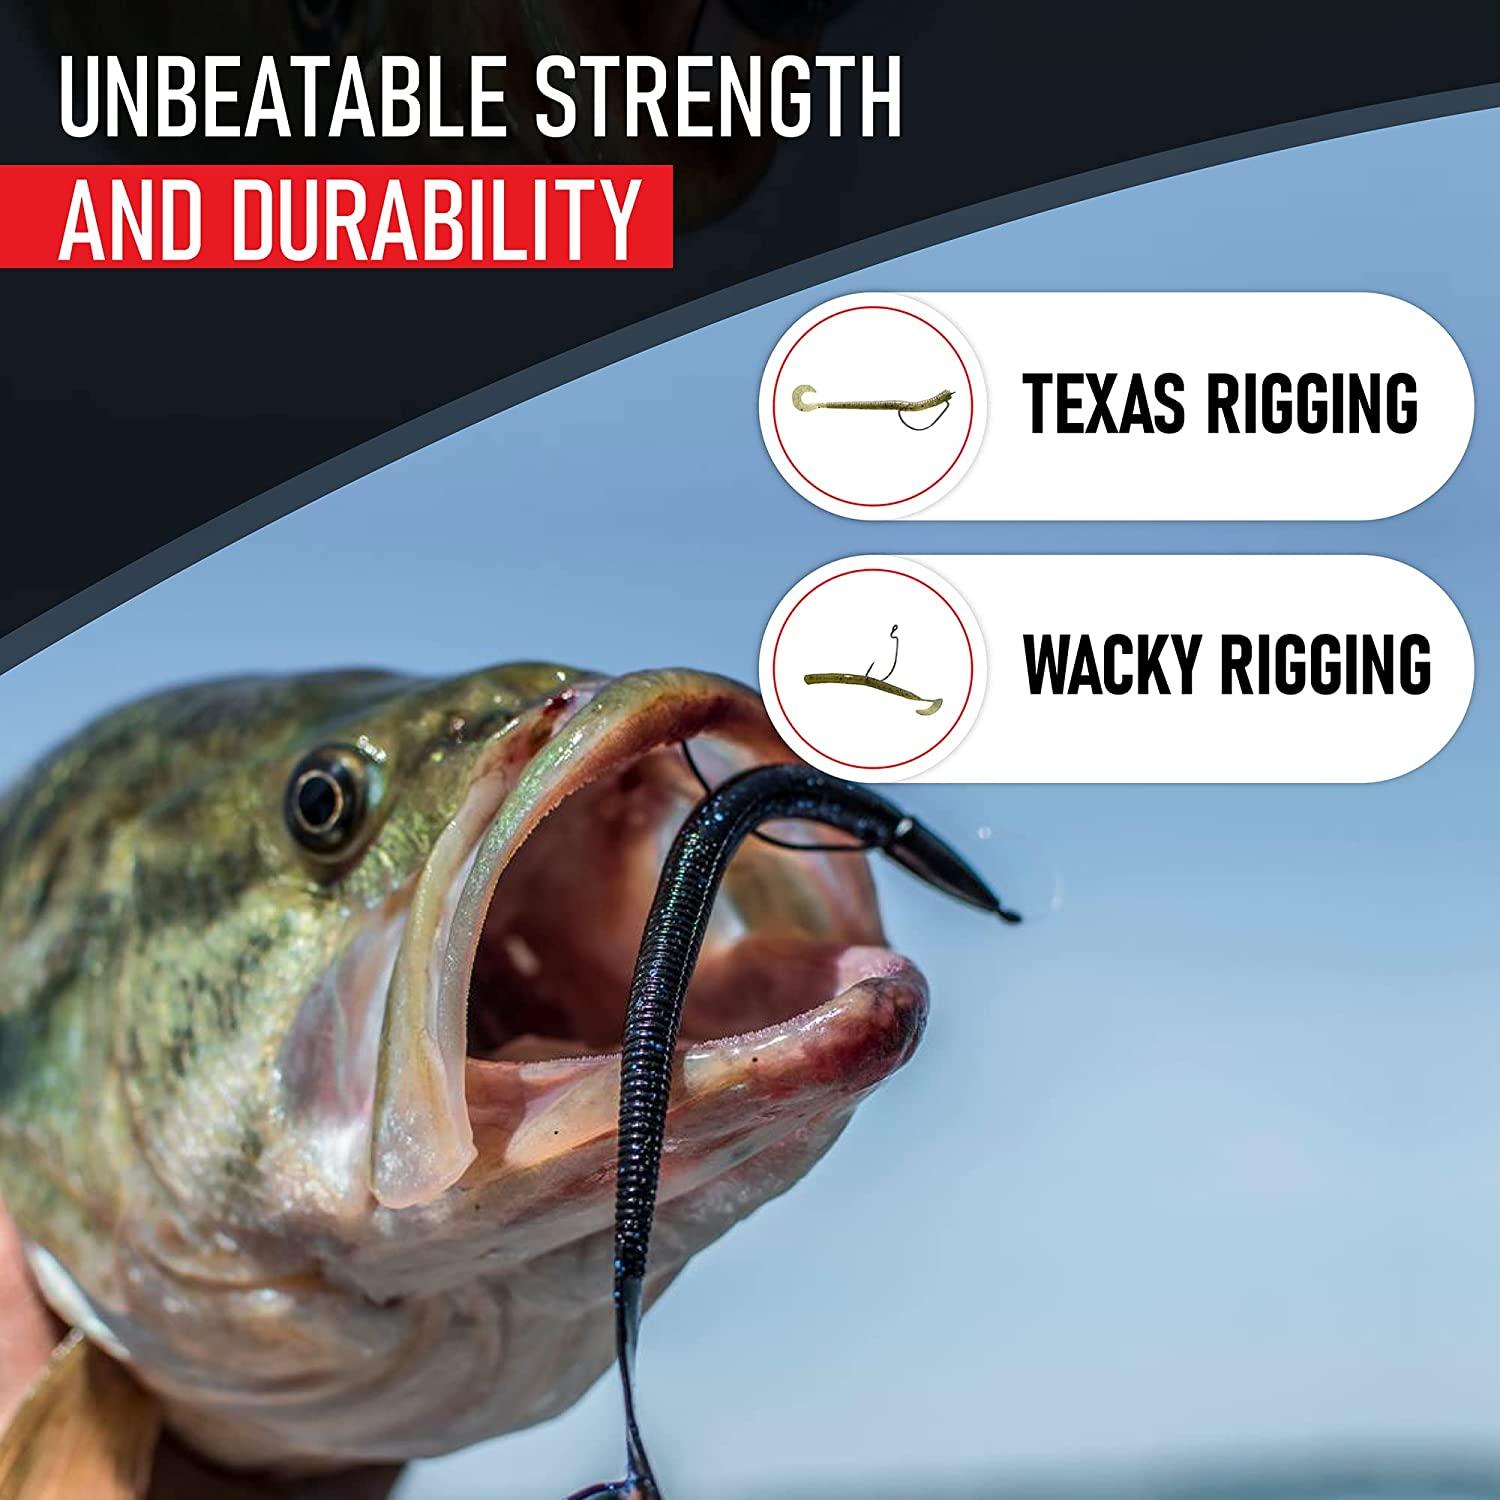 150 Offset Fishing Hooks Assortment - Bass Hooks Texas Rig Hooks